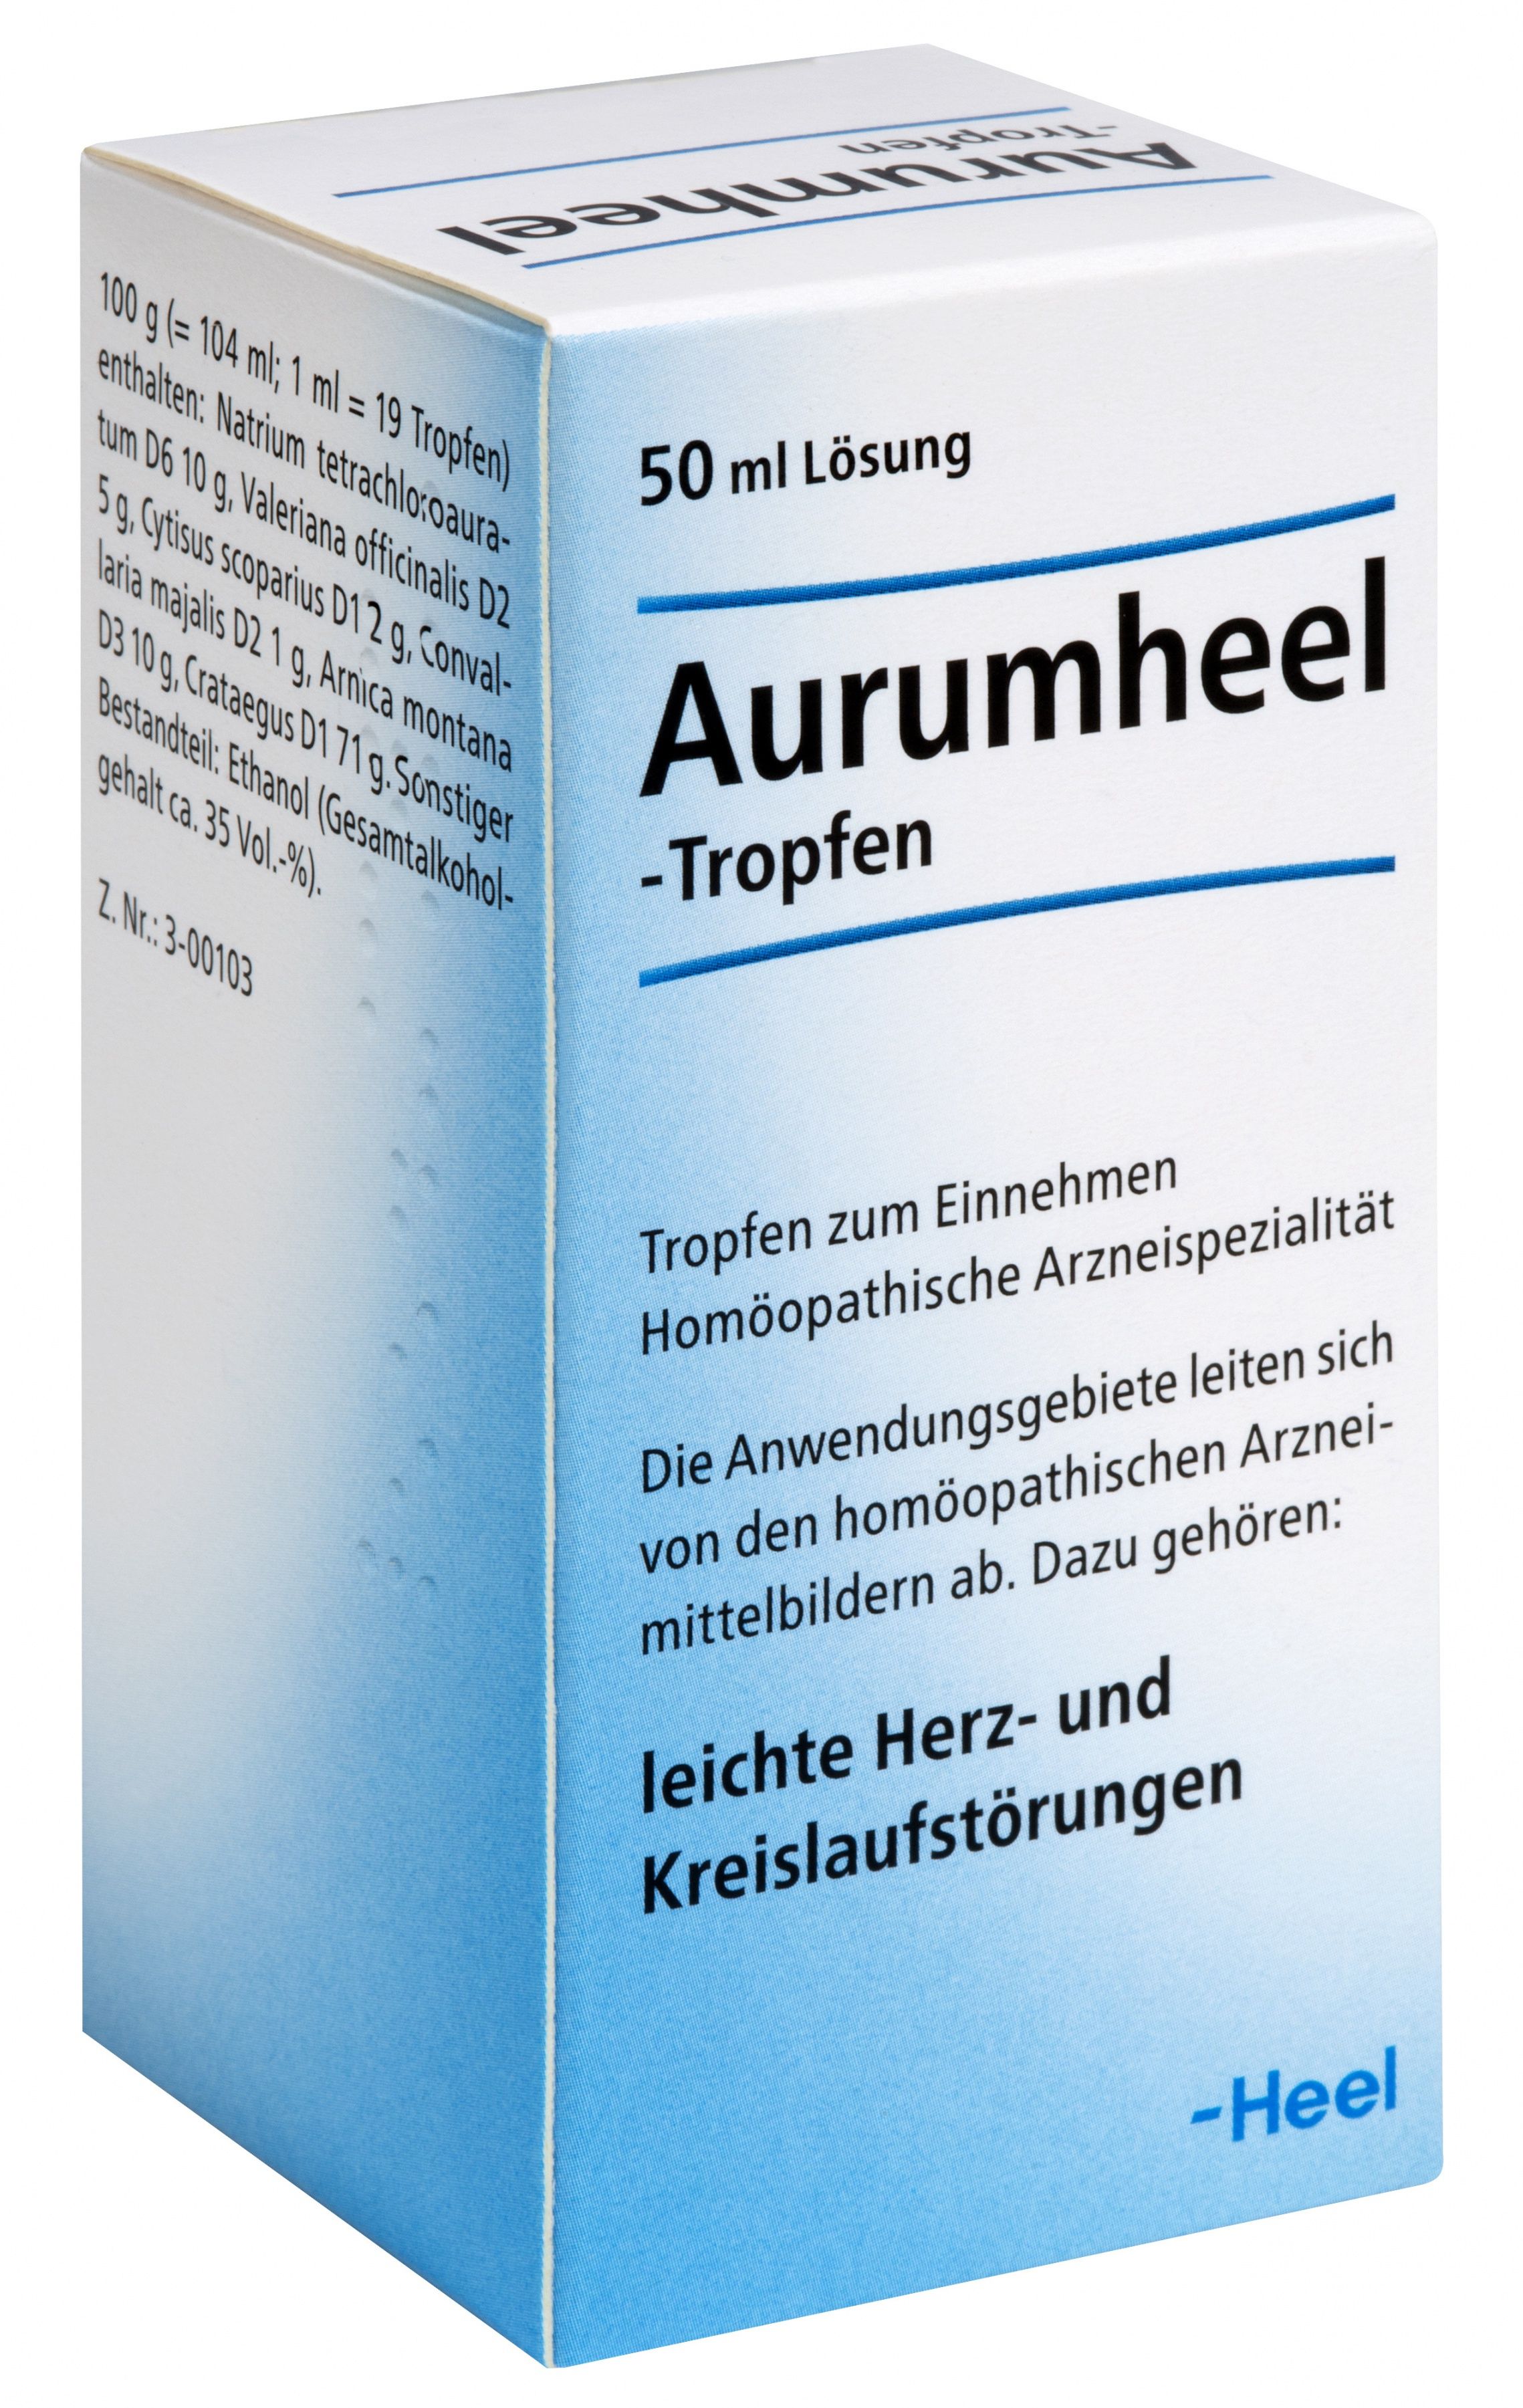 Abbildung Aurumheel-Tropfen